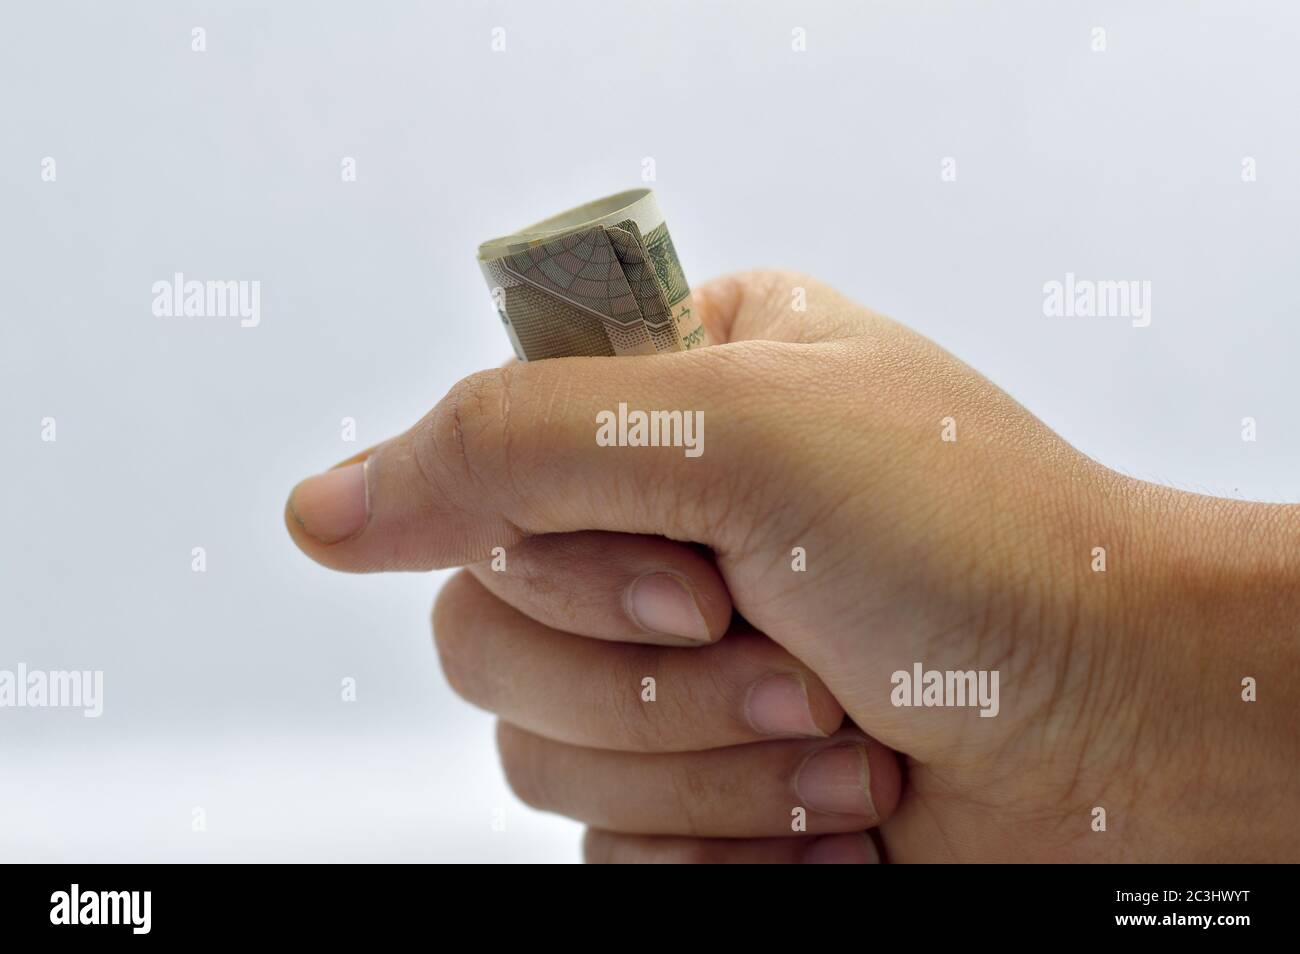 Hombre de mano agarrando o agarrando dinero, rupias indias. Foto de stock